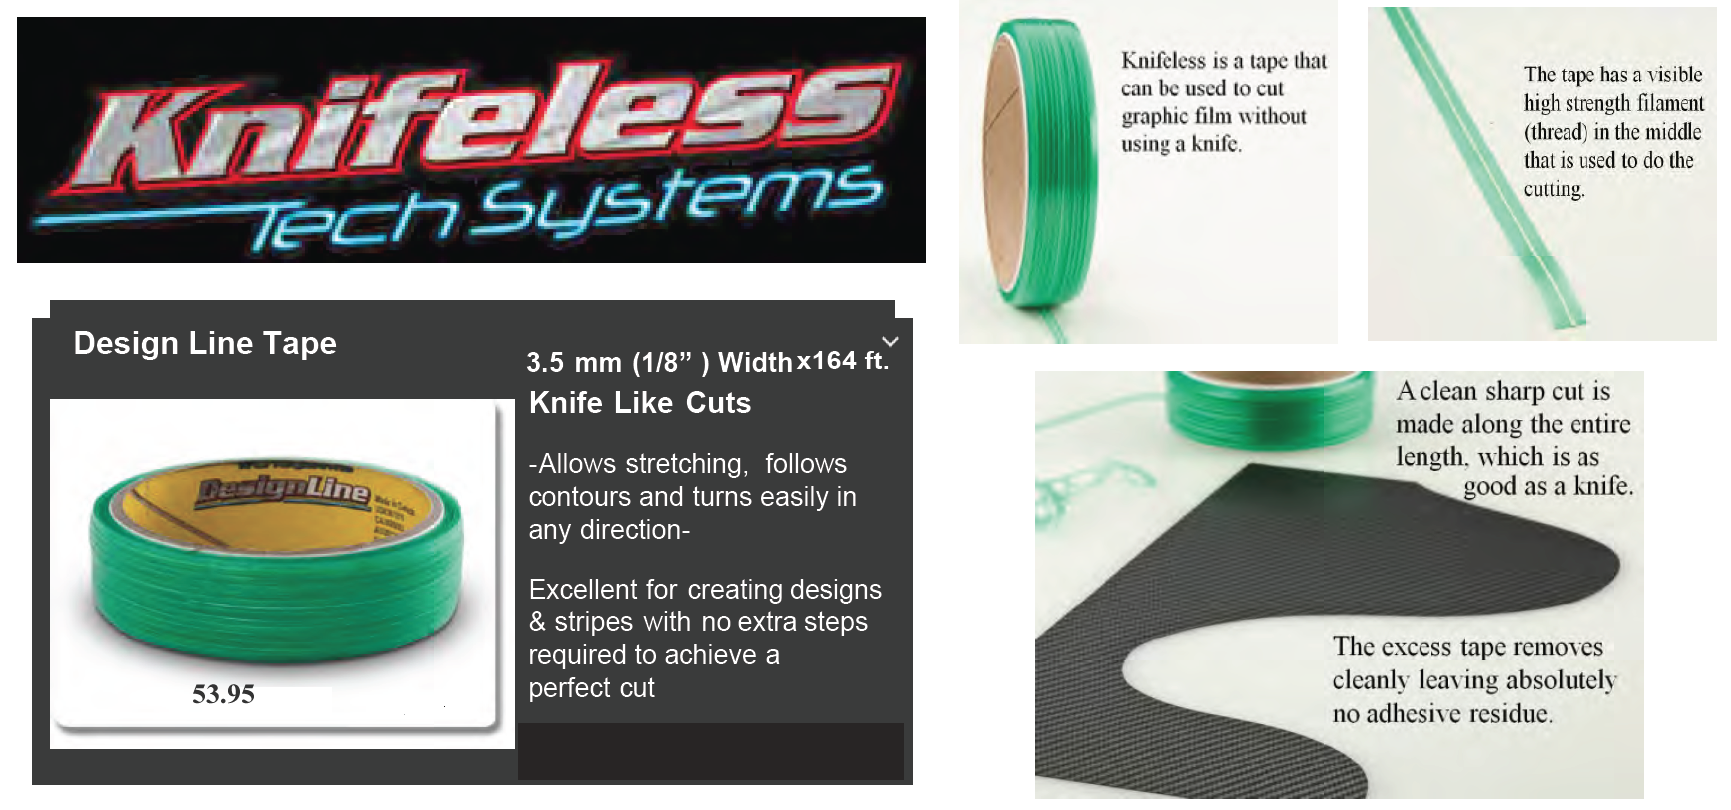 knifeless 1 - Knifeless Tape